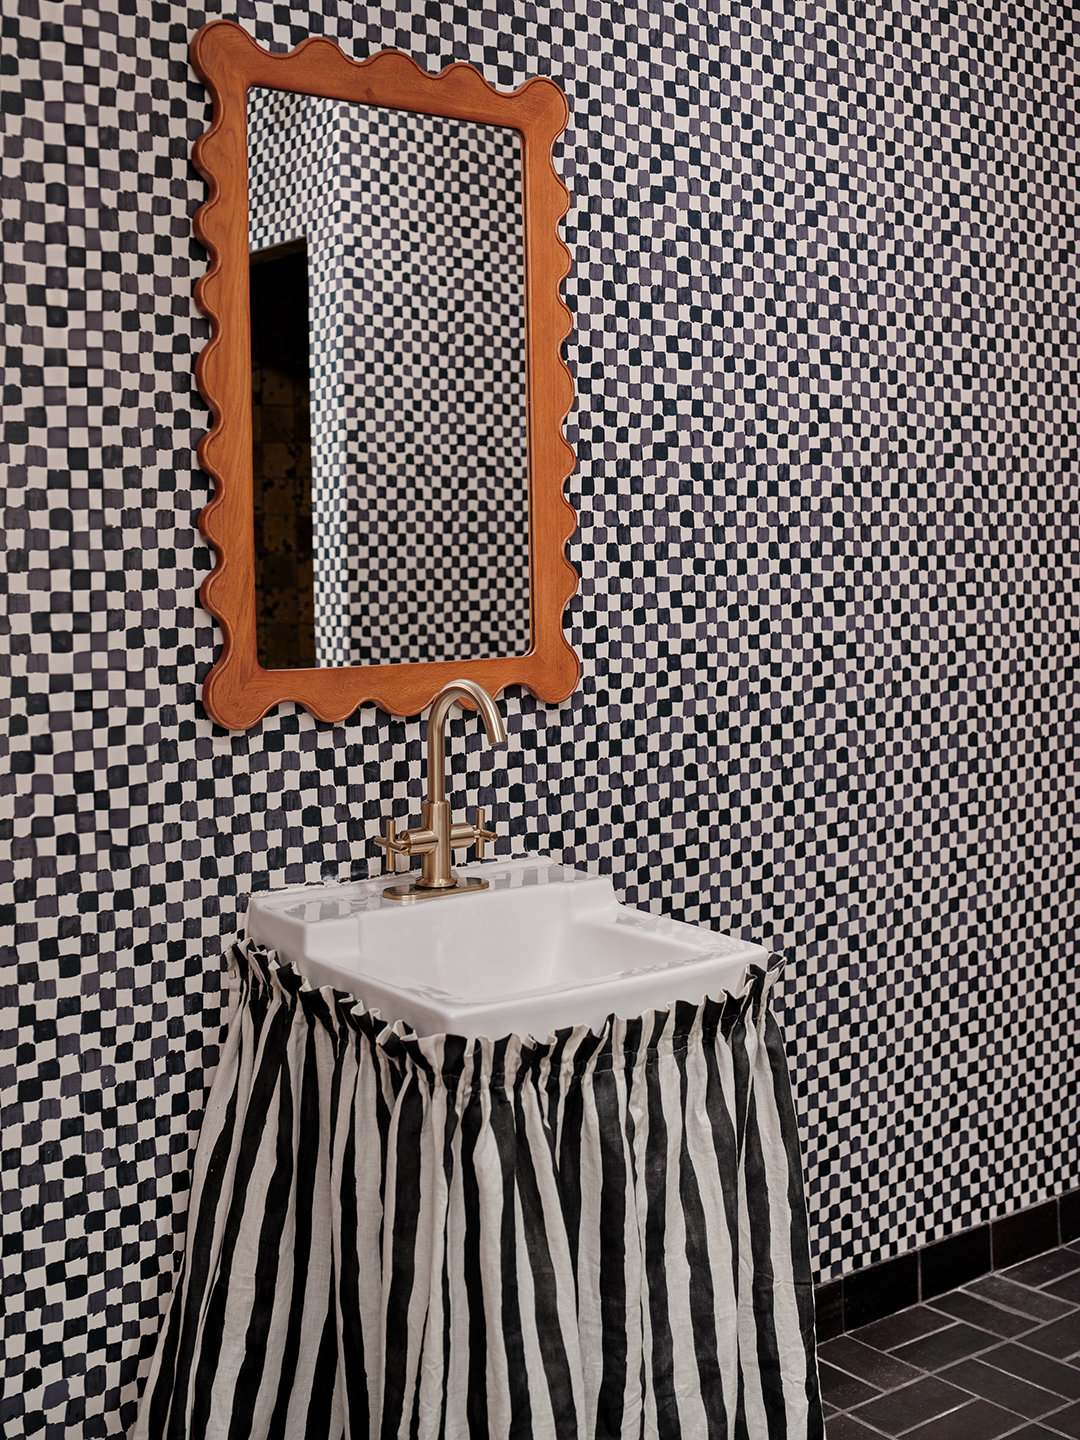 Checkerboard wallpaper and striped skirt around sink